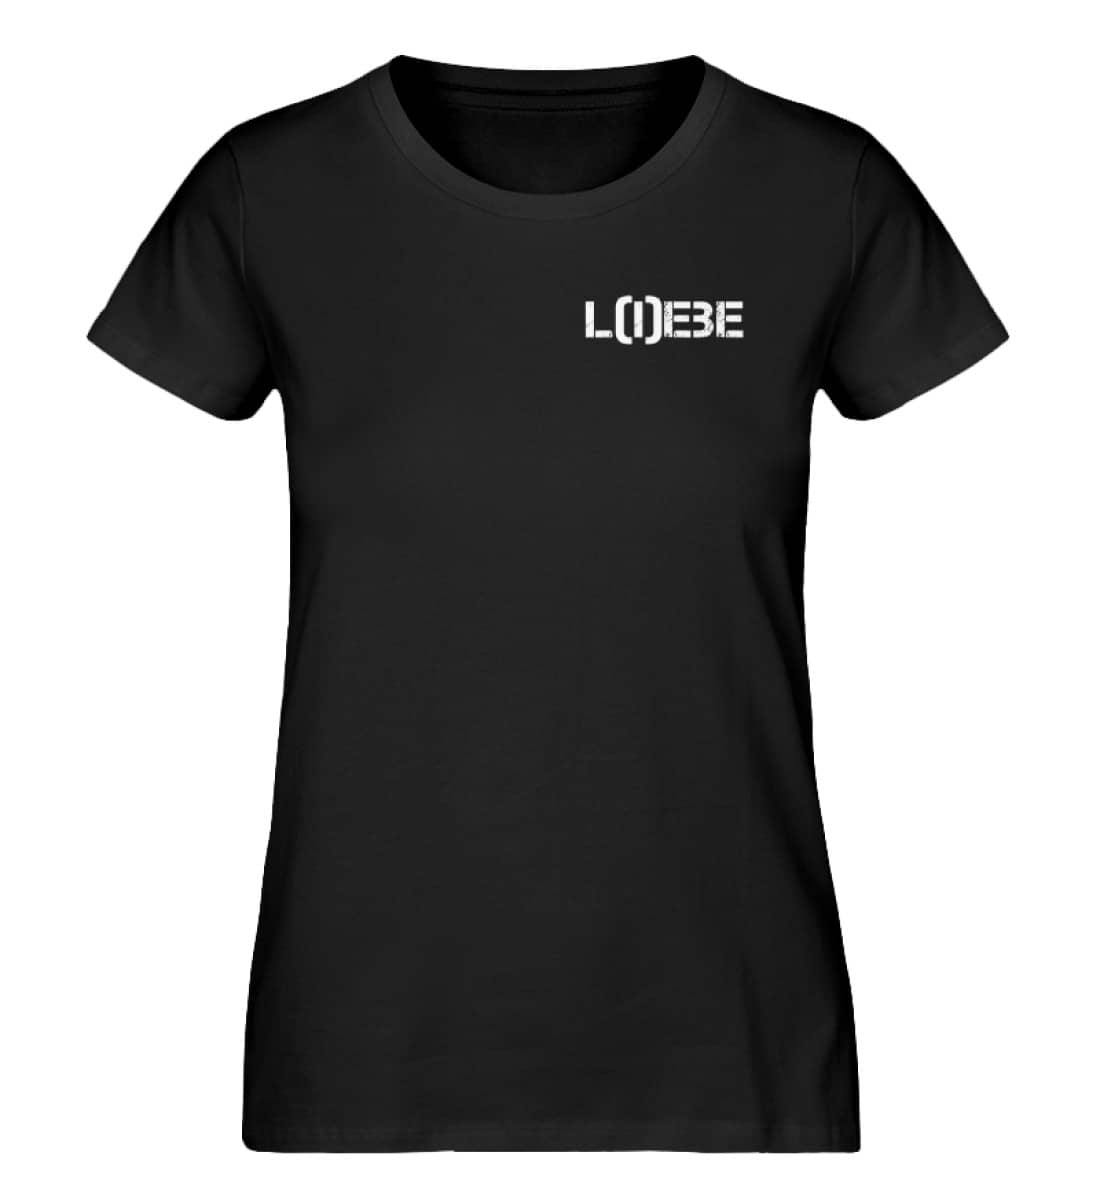 L(i)ebe - Damen Premium Organic Shirt-16